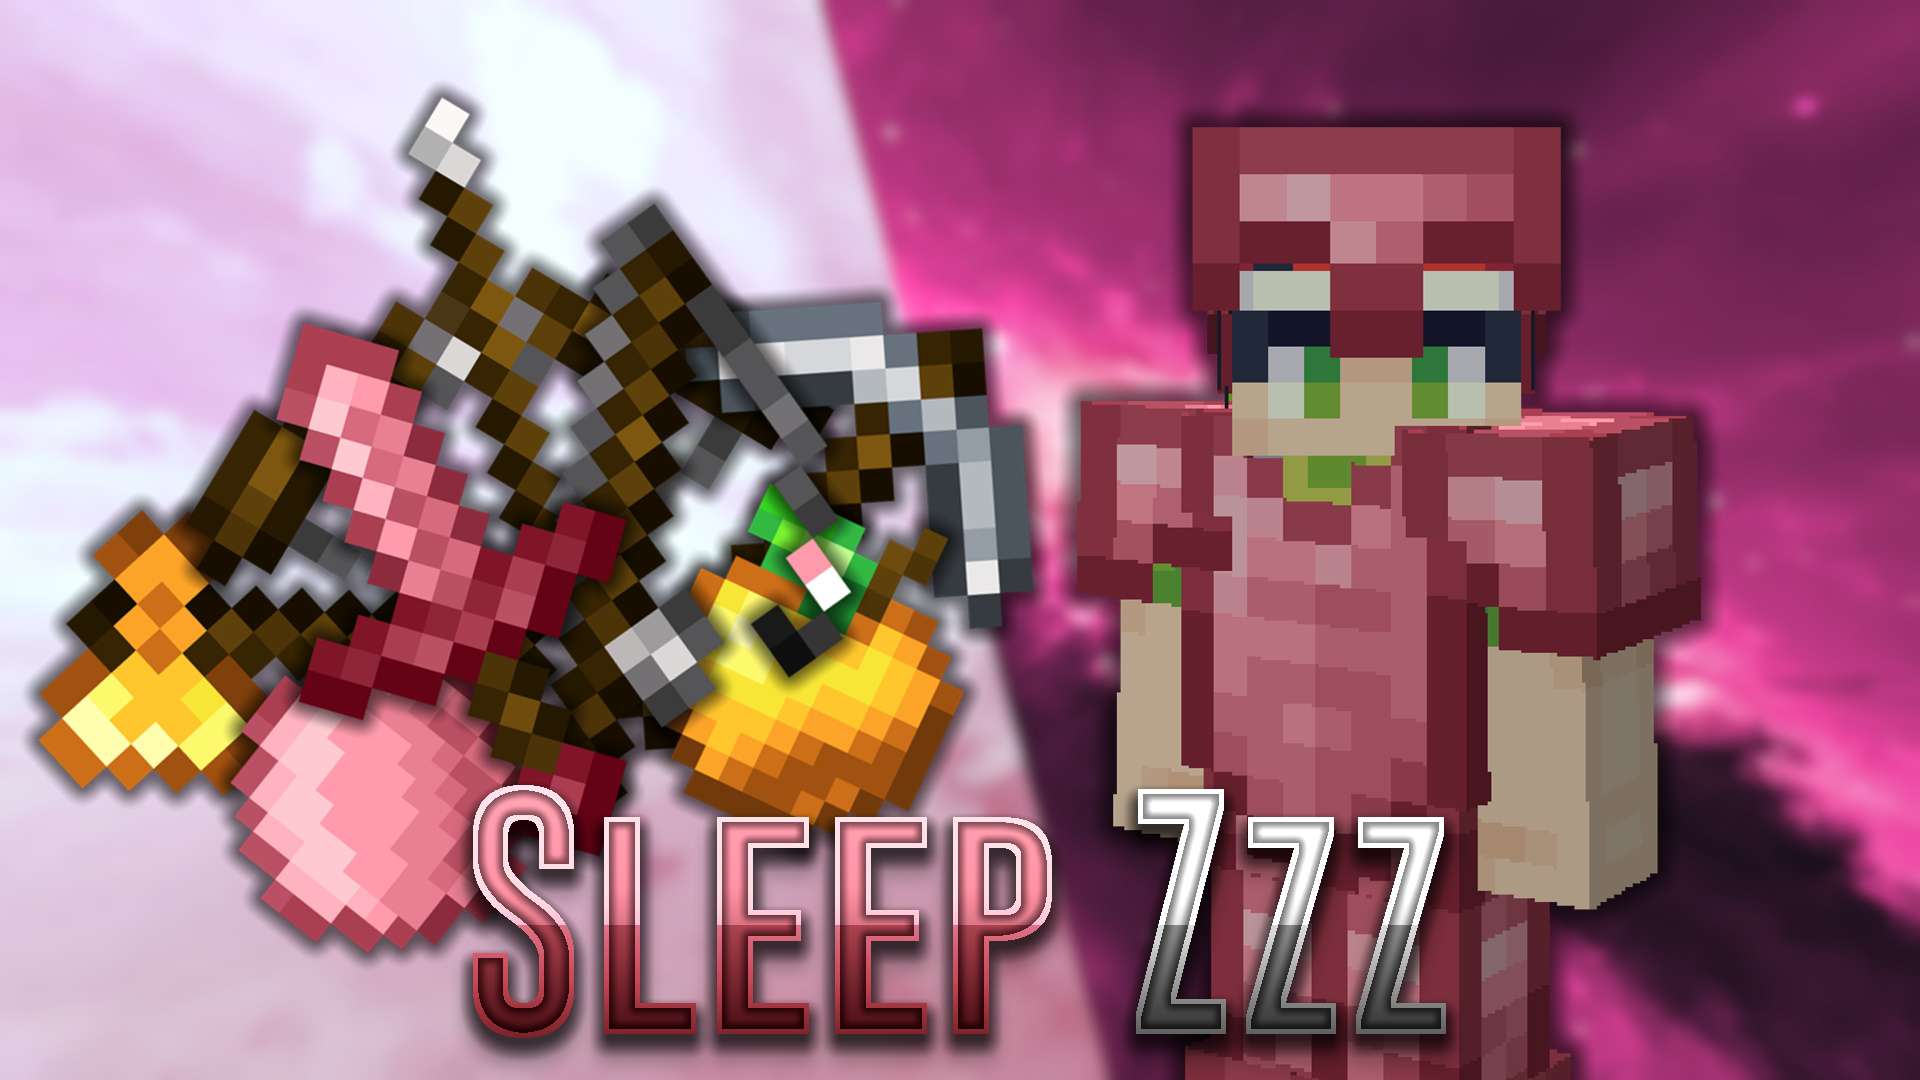 Sleep Zzz 16 by Mek on PvPRP